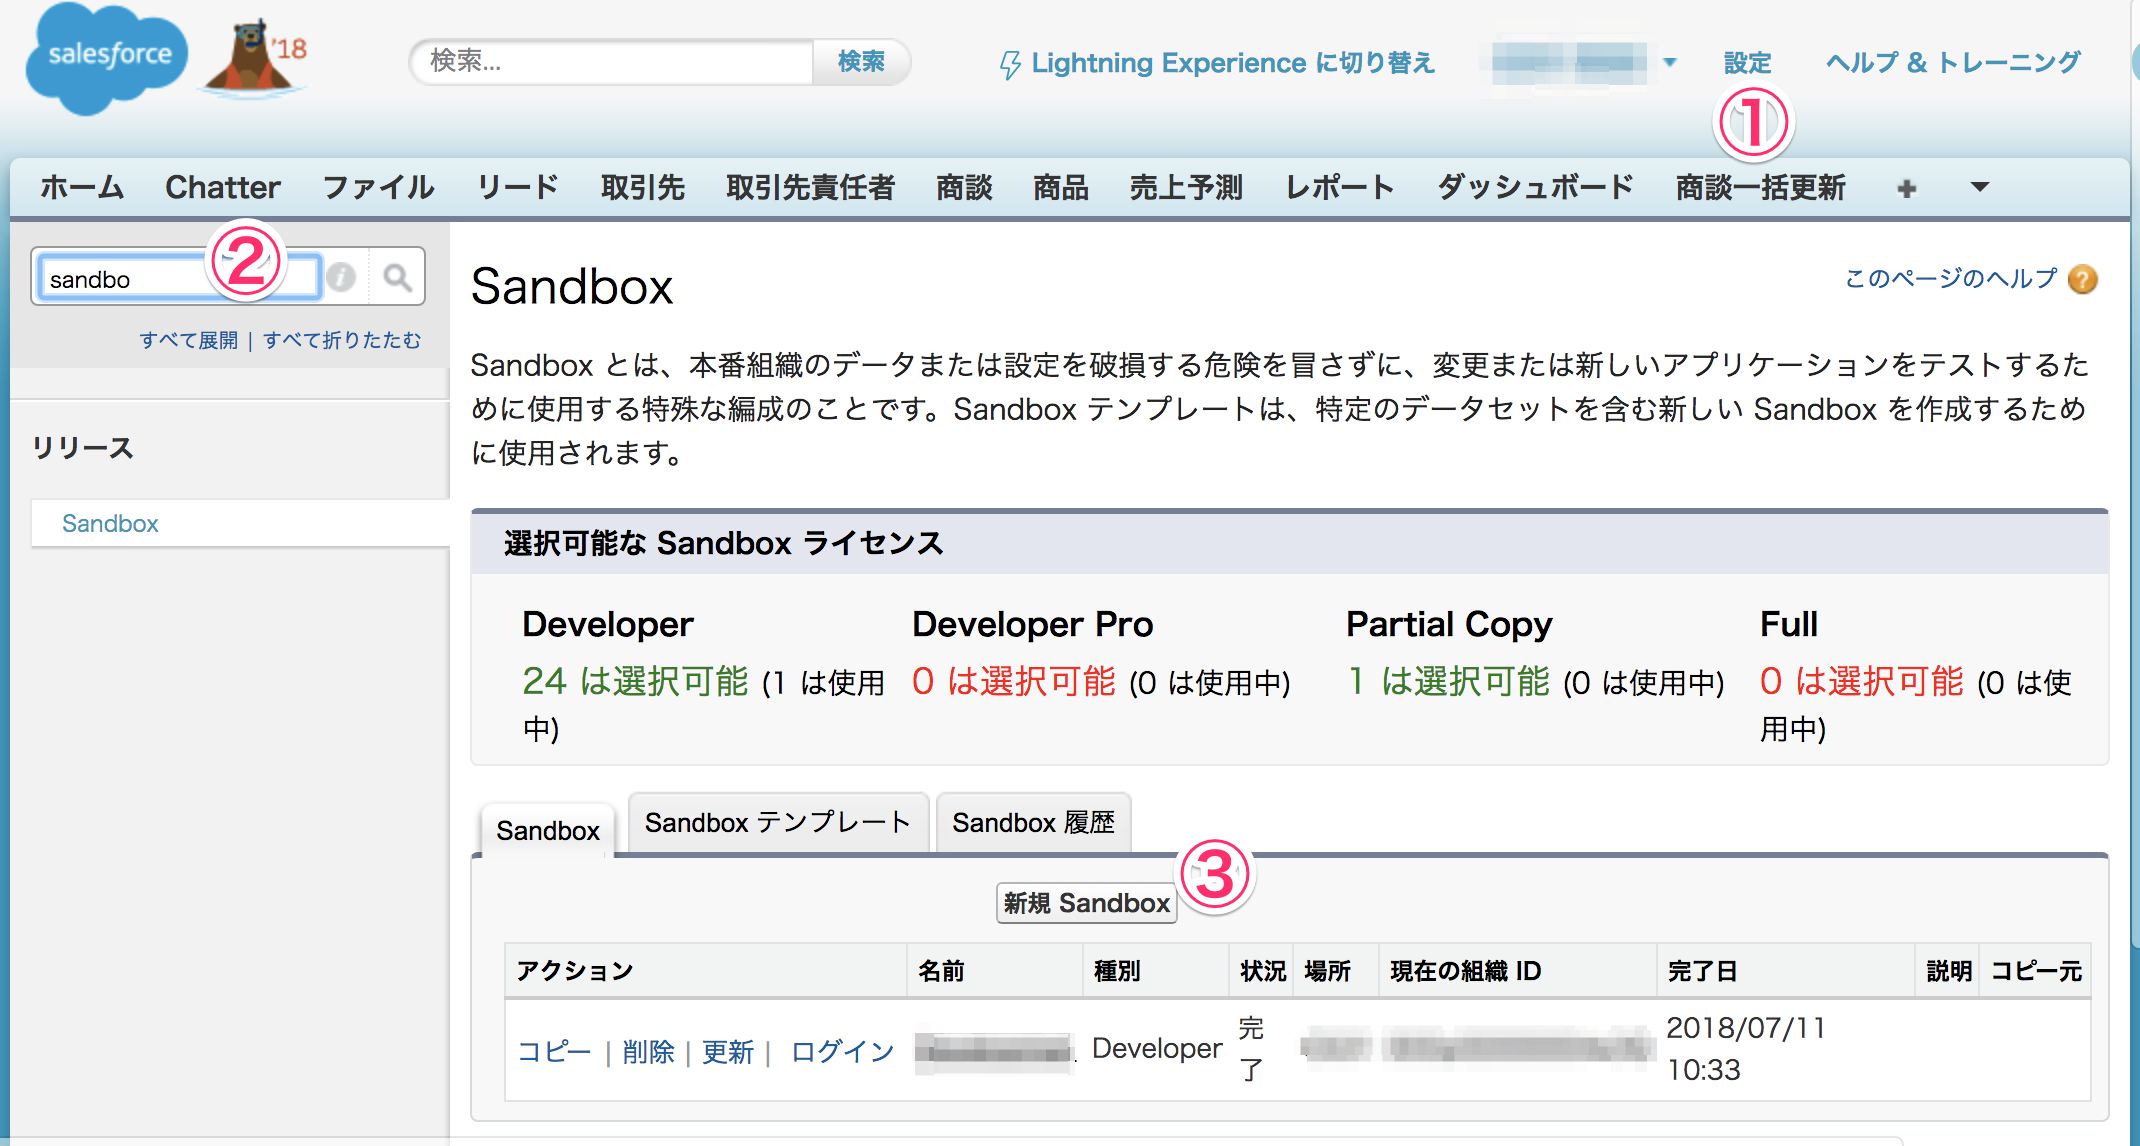 Sandbox___Salesforce_-_Enterprise_Edition.png